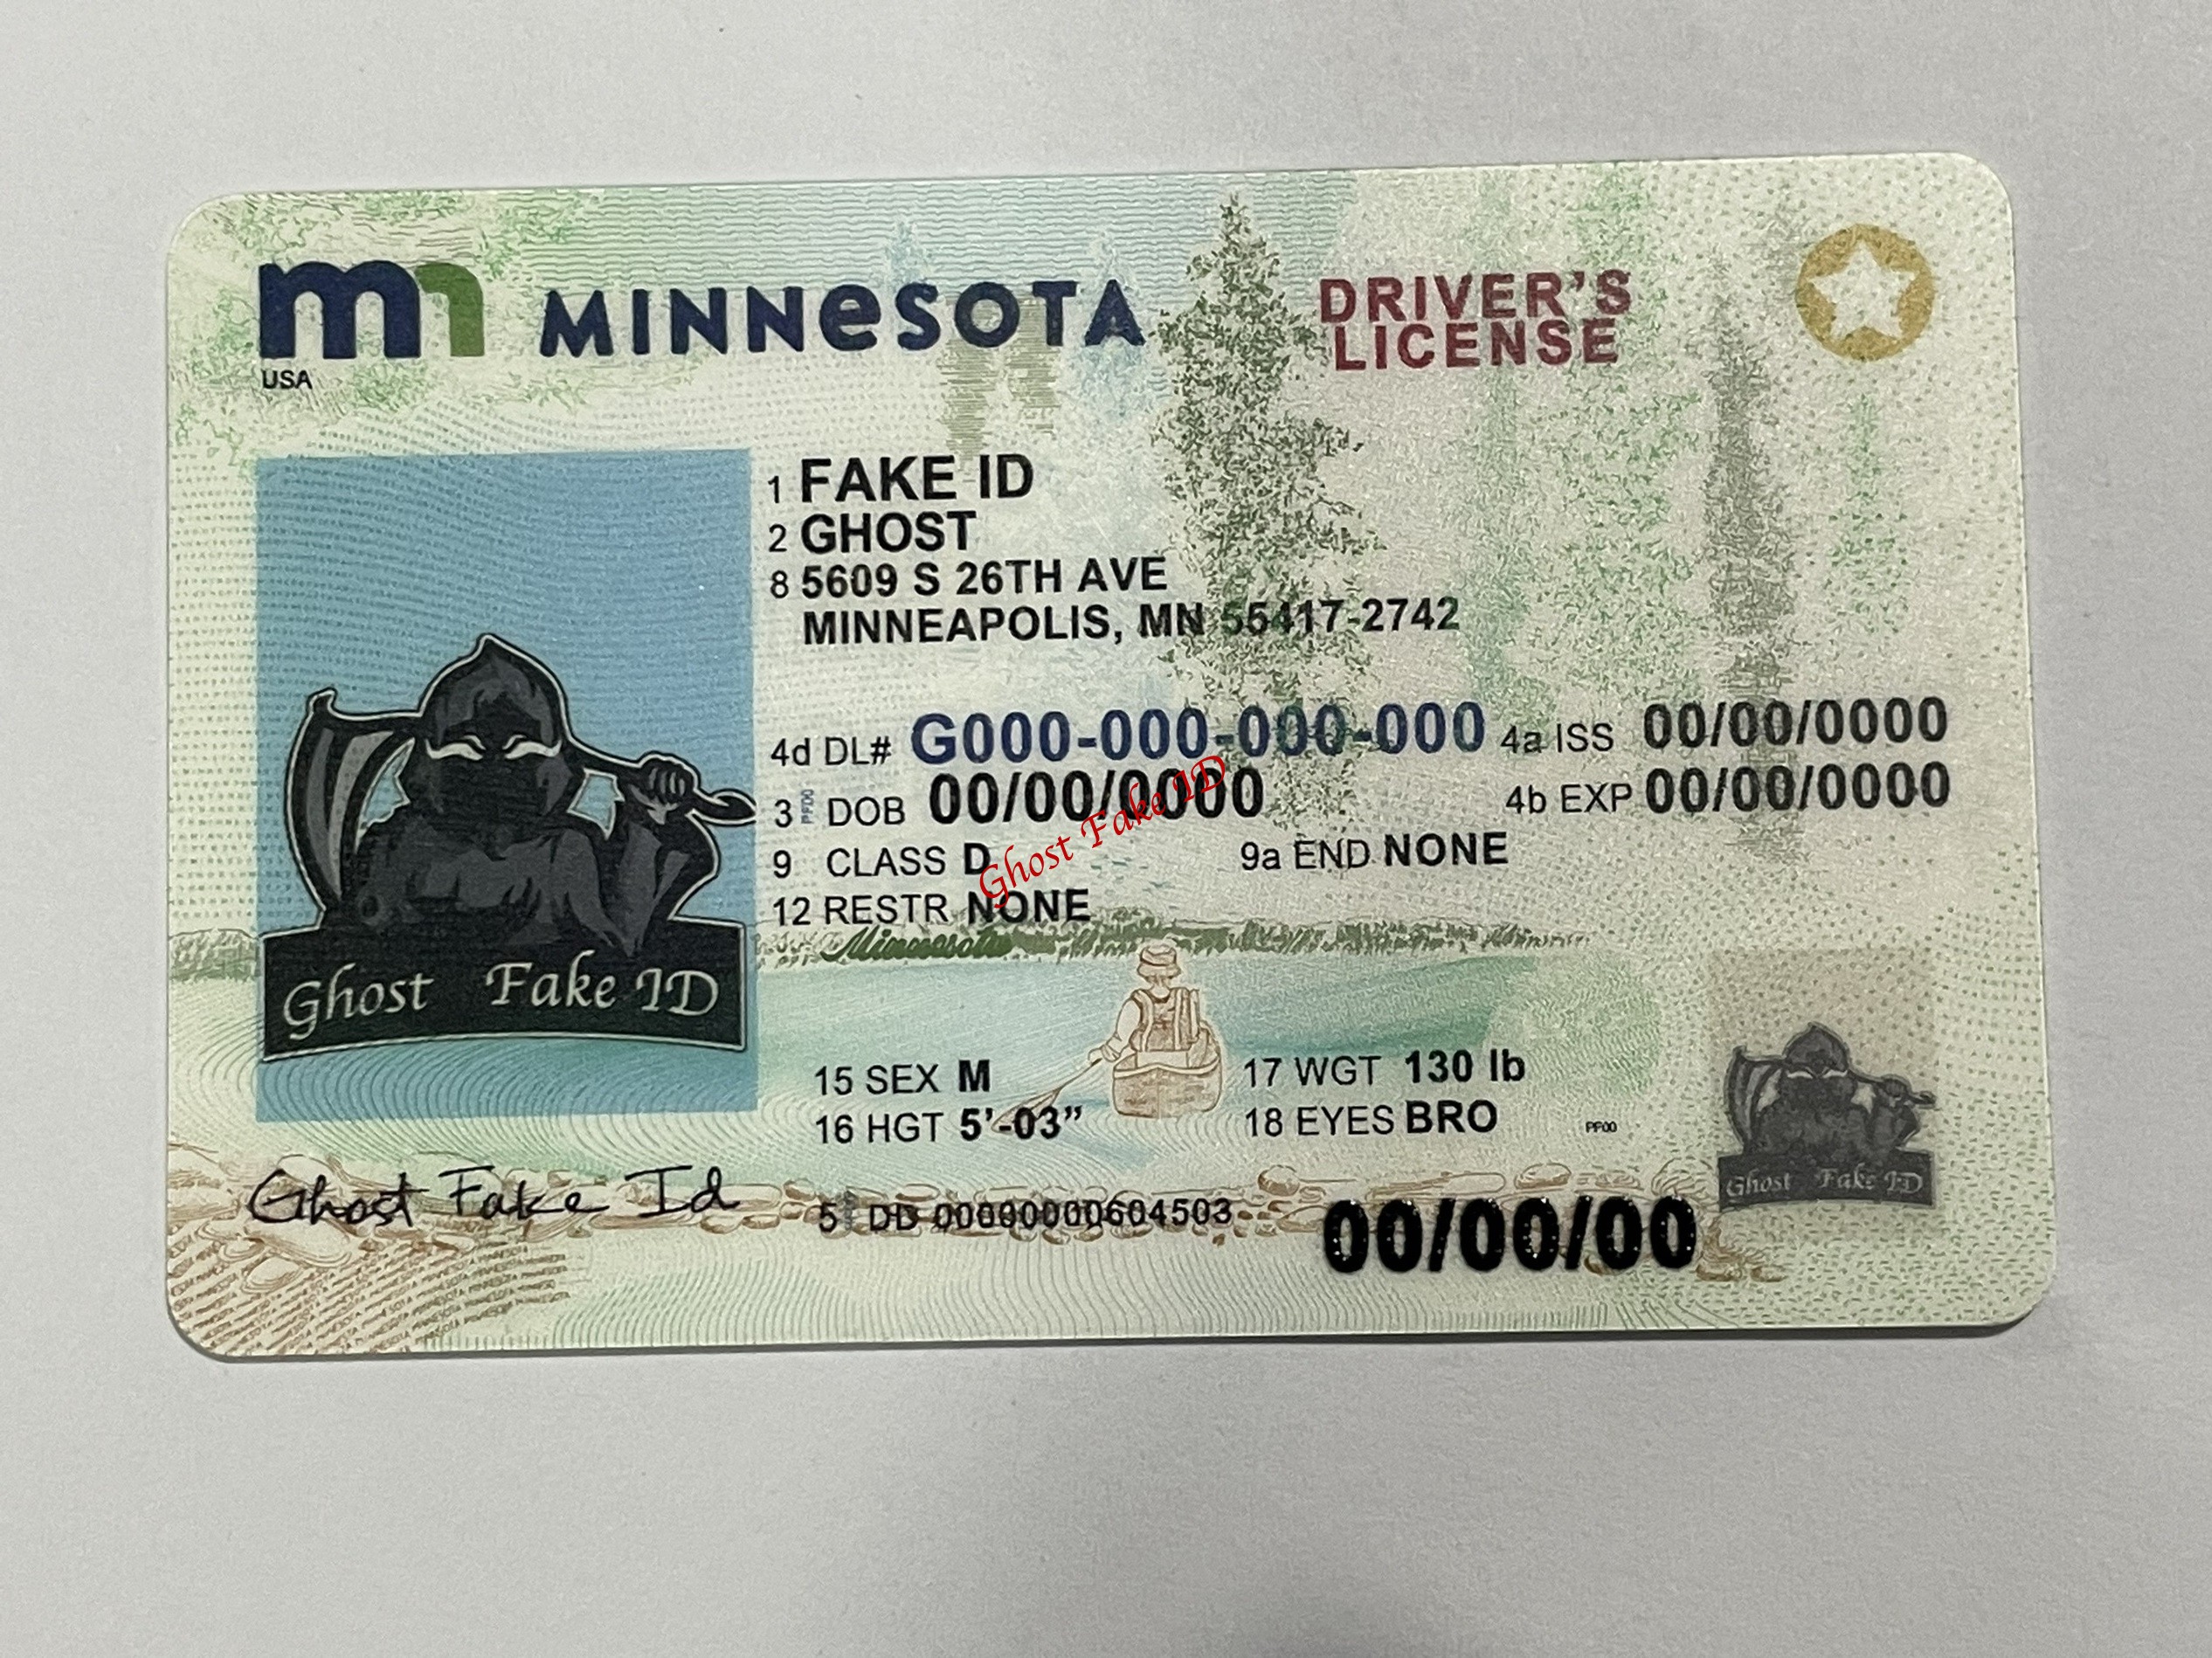 Minnesota - Scanable fake id